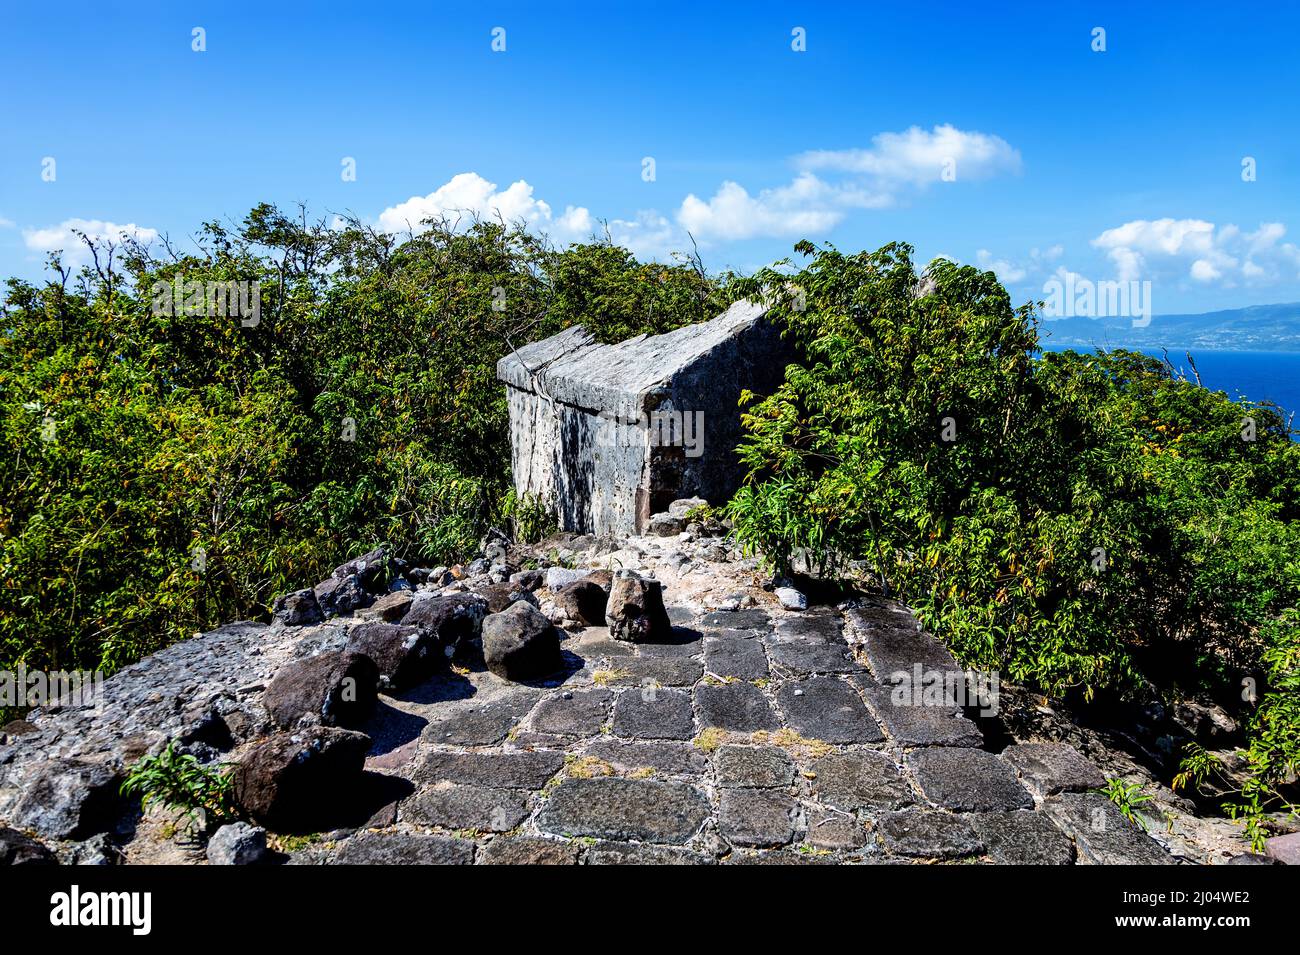 Ruina de la fortificación de Caroline, Terre-de-Haut, Iles des Saintes, Les Saintes, Guadalupe, Kleine Antillen, Caribe. Foto de stock